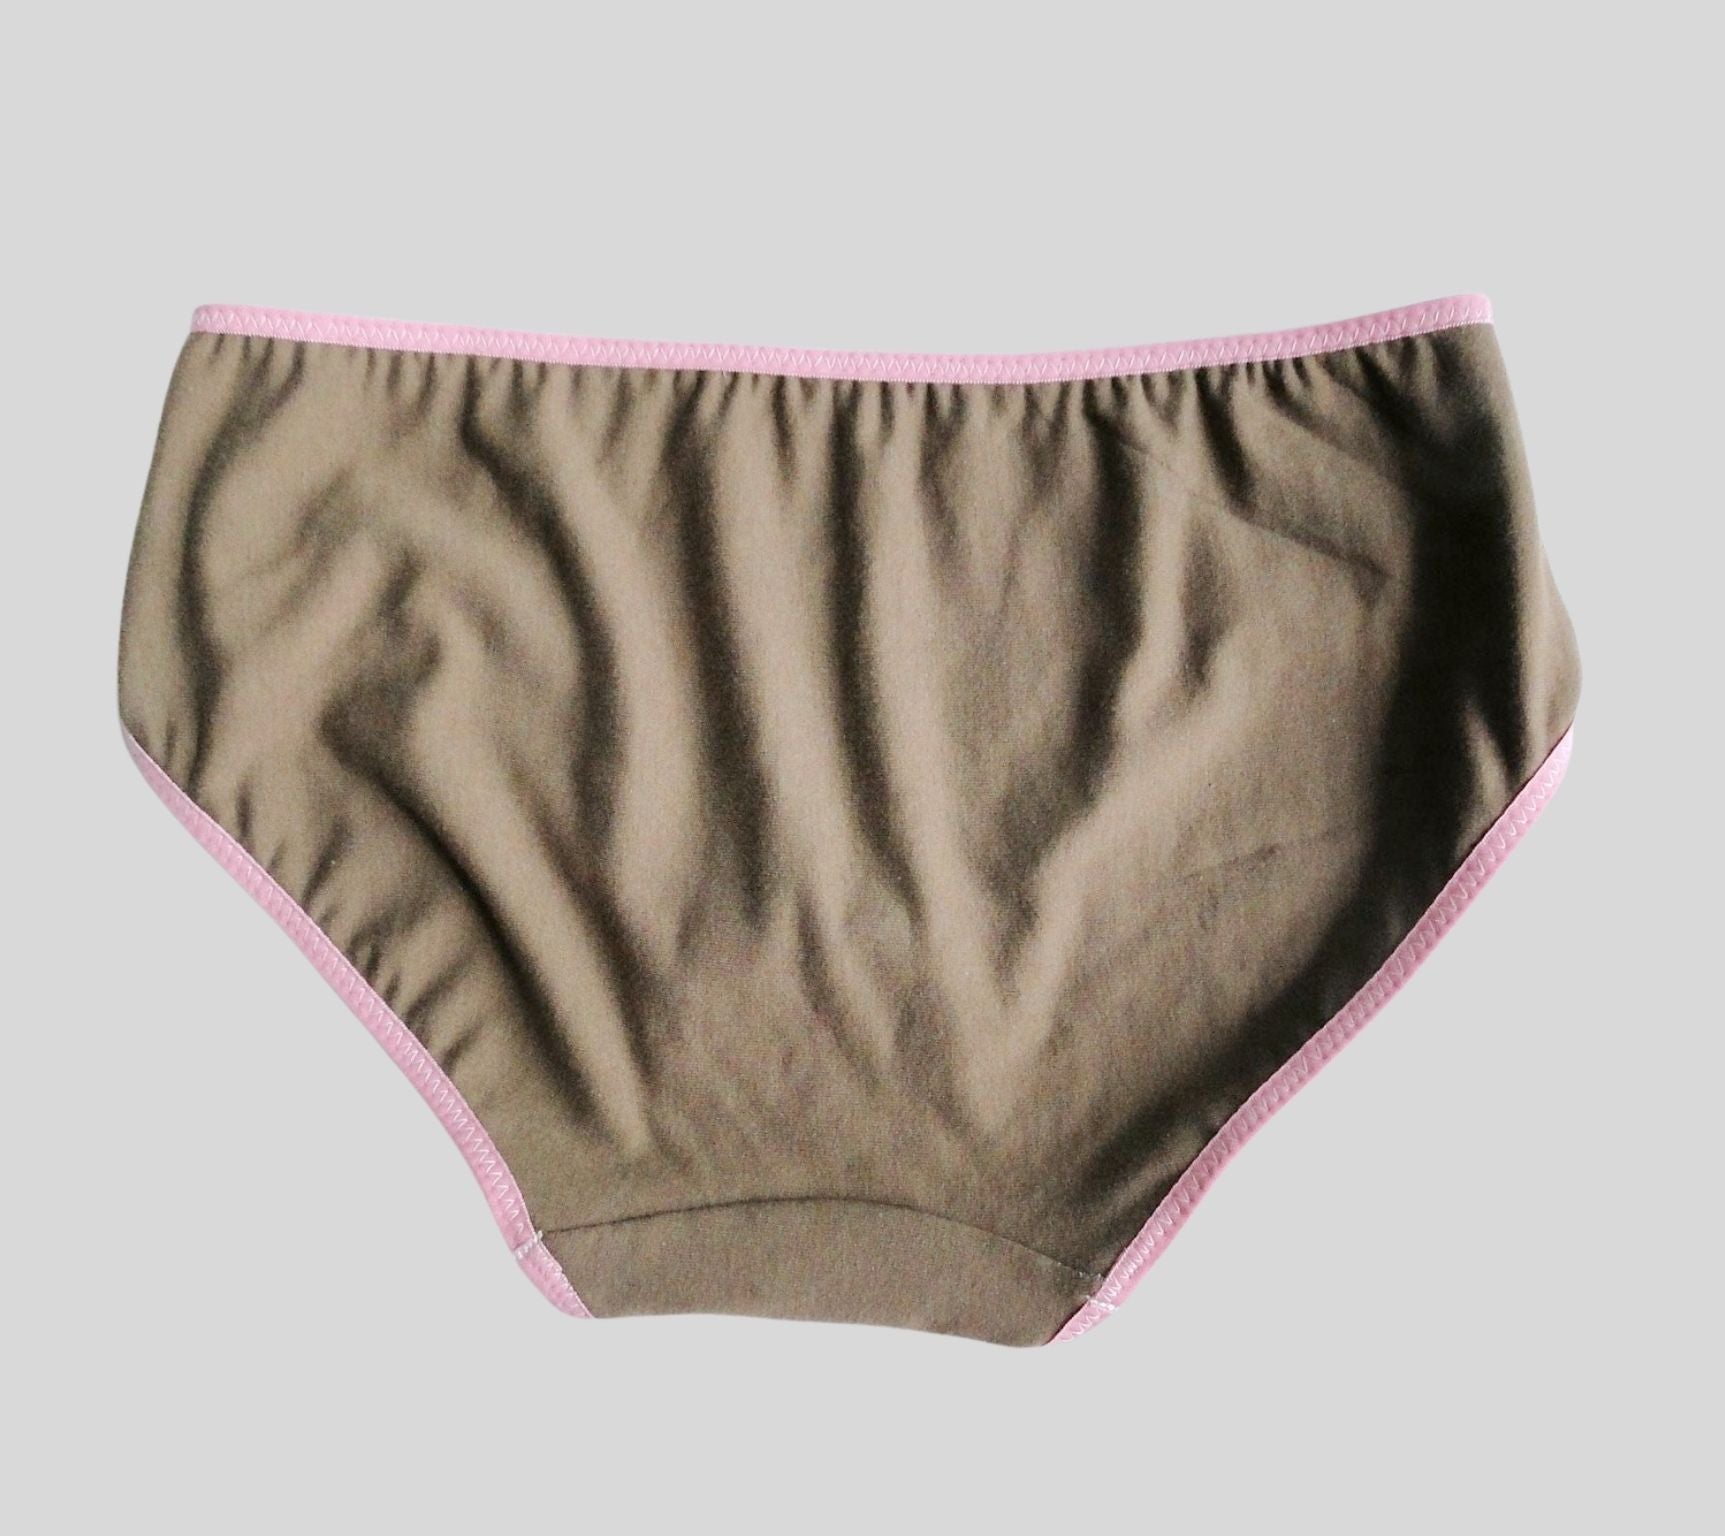  Cotton Underwear Women - Women's Panties / Women's Lingerie:  Clothing, Shoes & Jewelry